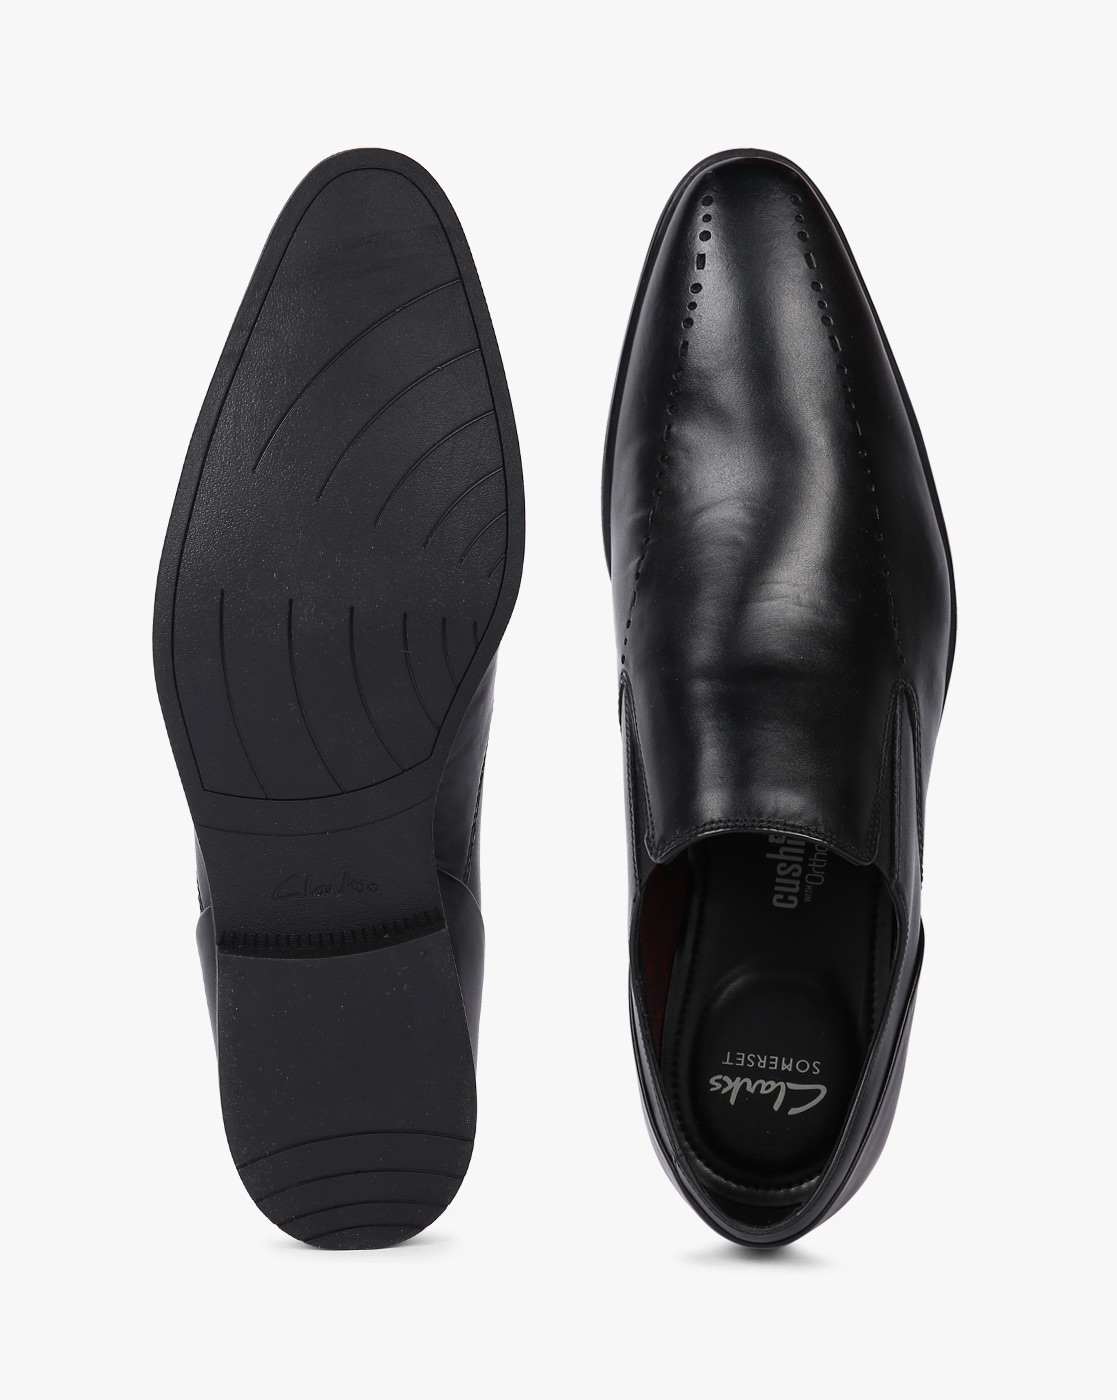 clarks formal shoes for mens